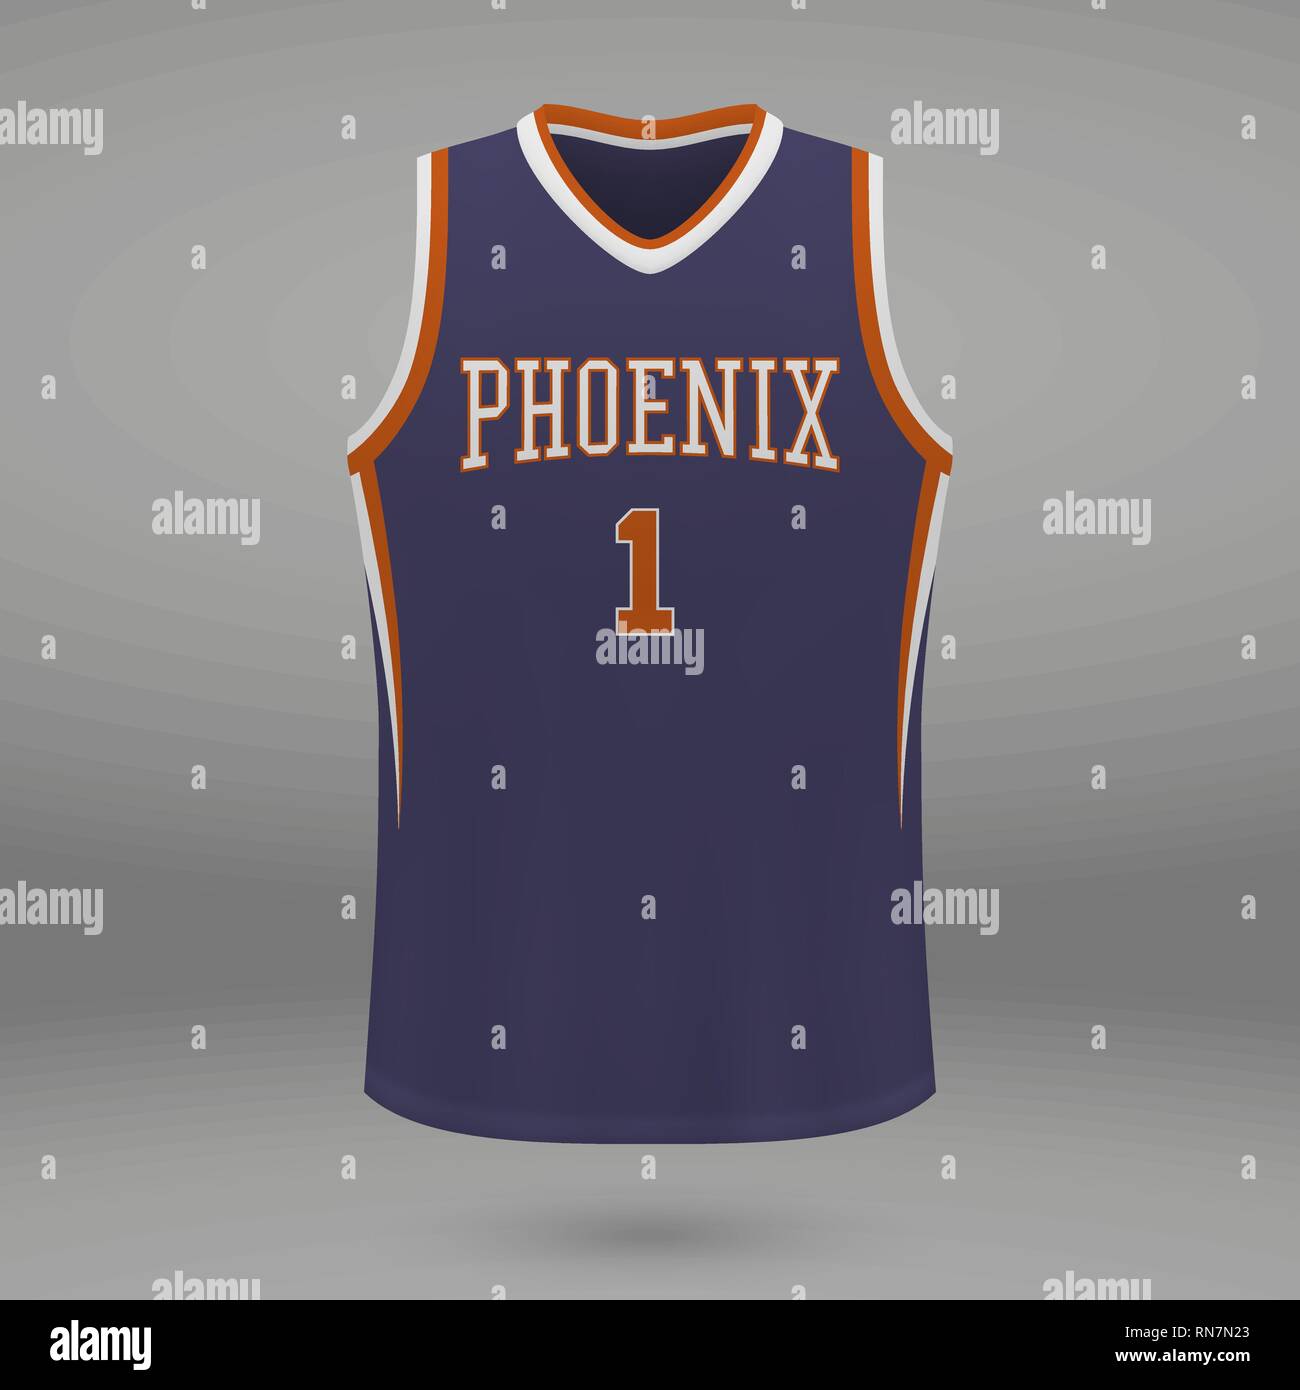 Phoenix suns jersey design pattern 133 Royalty Free Vector